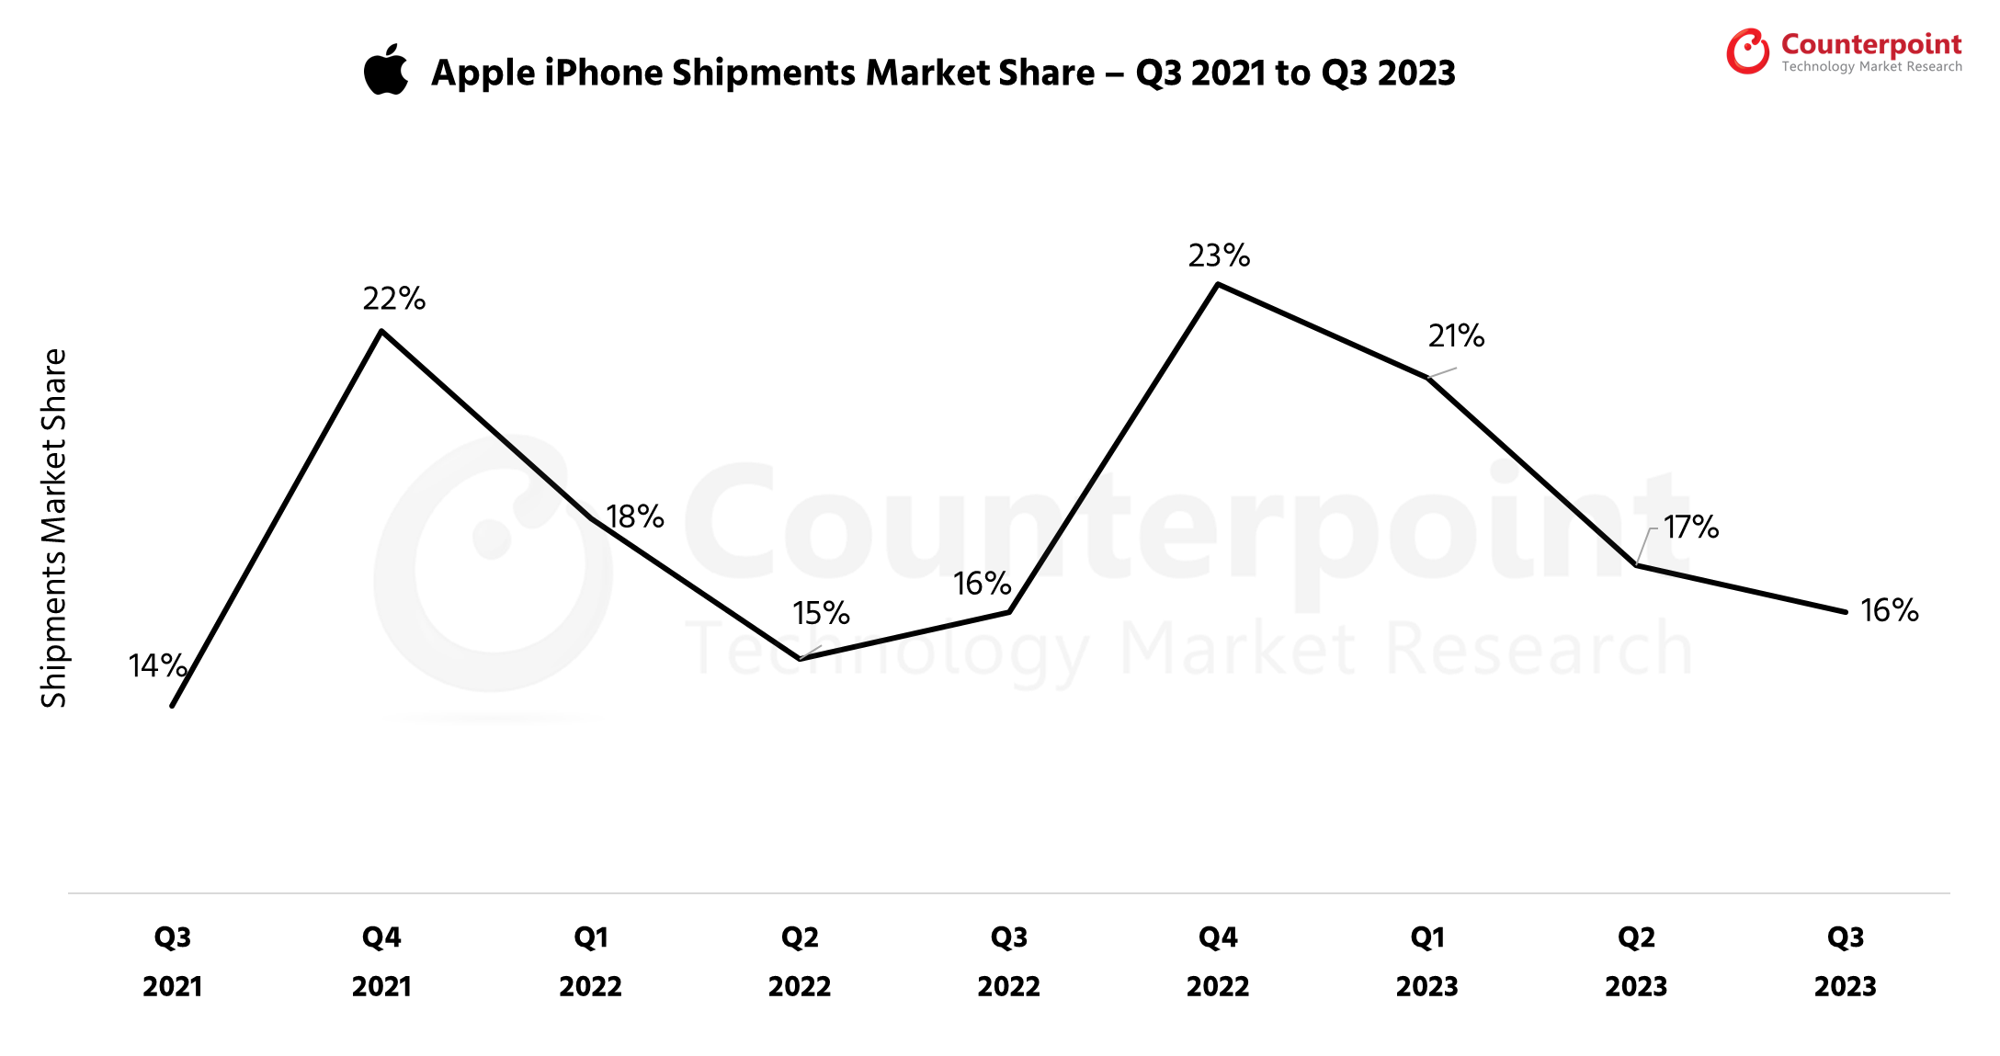 Apple iPhone Shipments Market Share Q3 2023